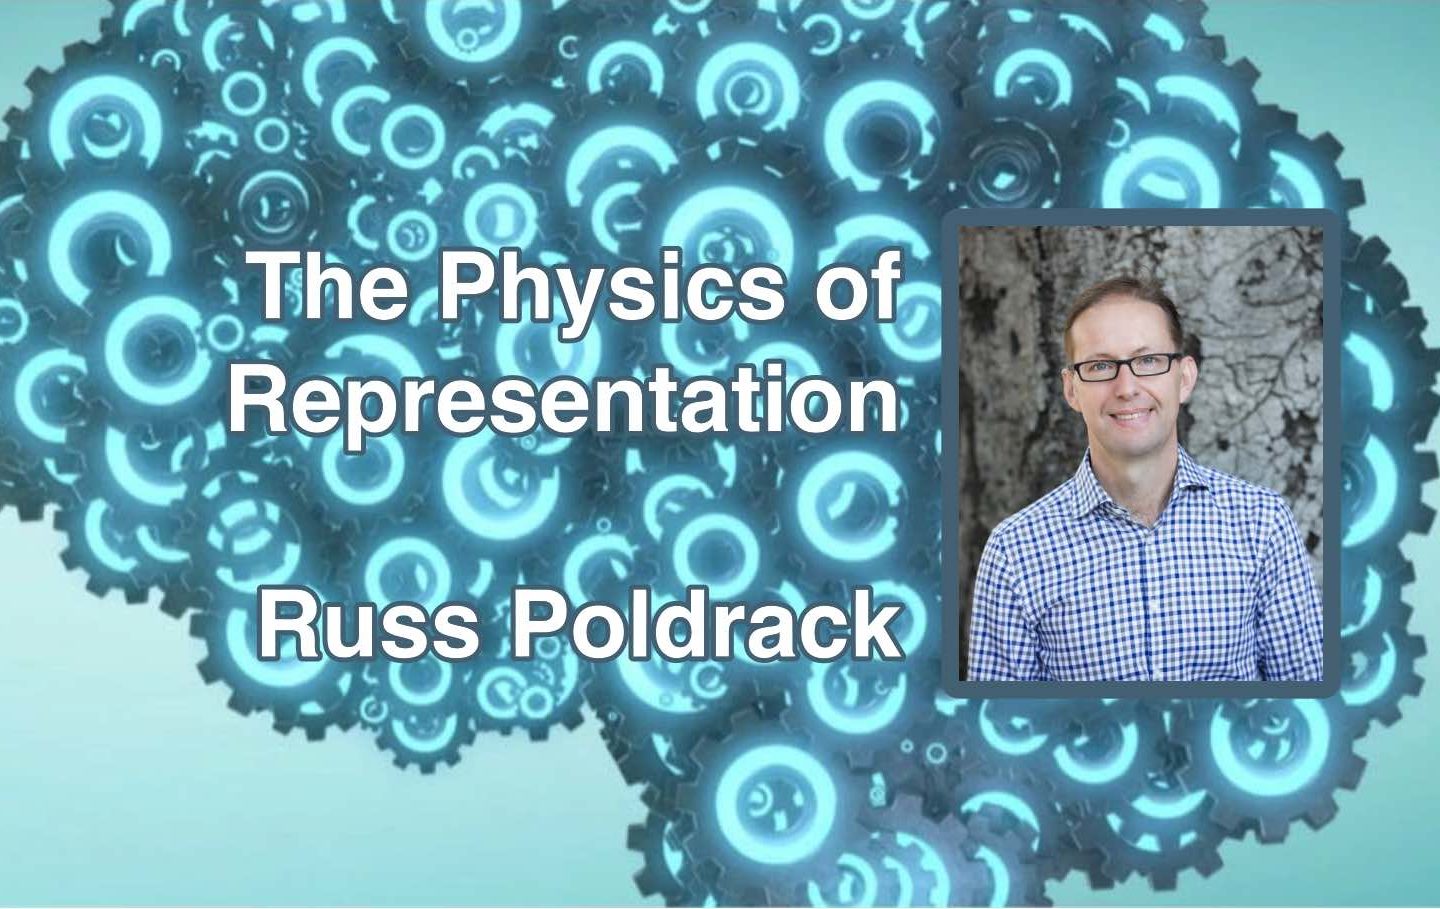 Russ Poldrack will live-stream “The Physics of Representation” Friday